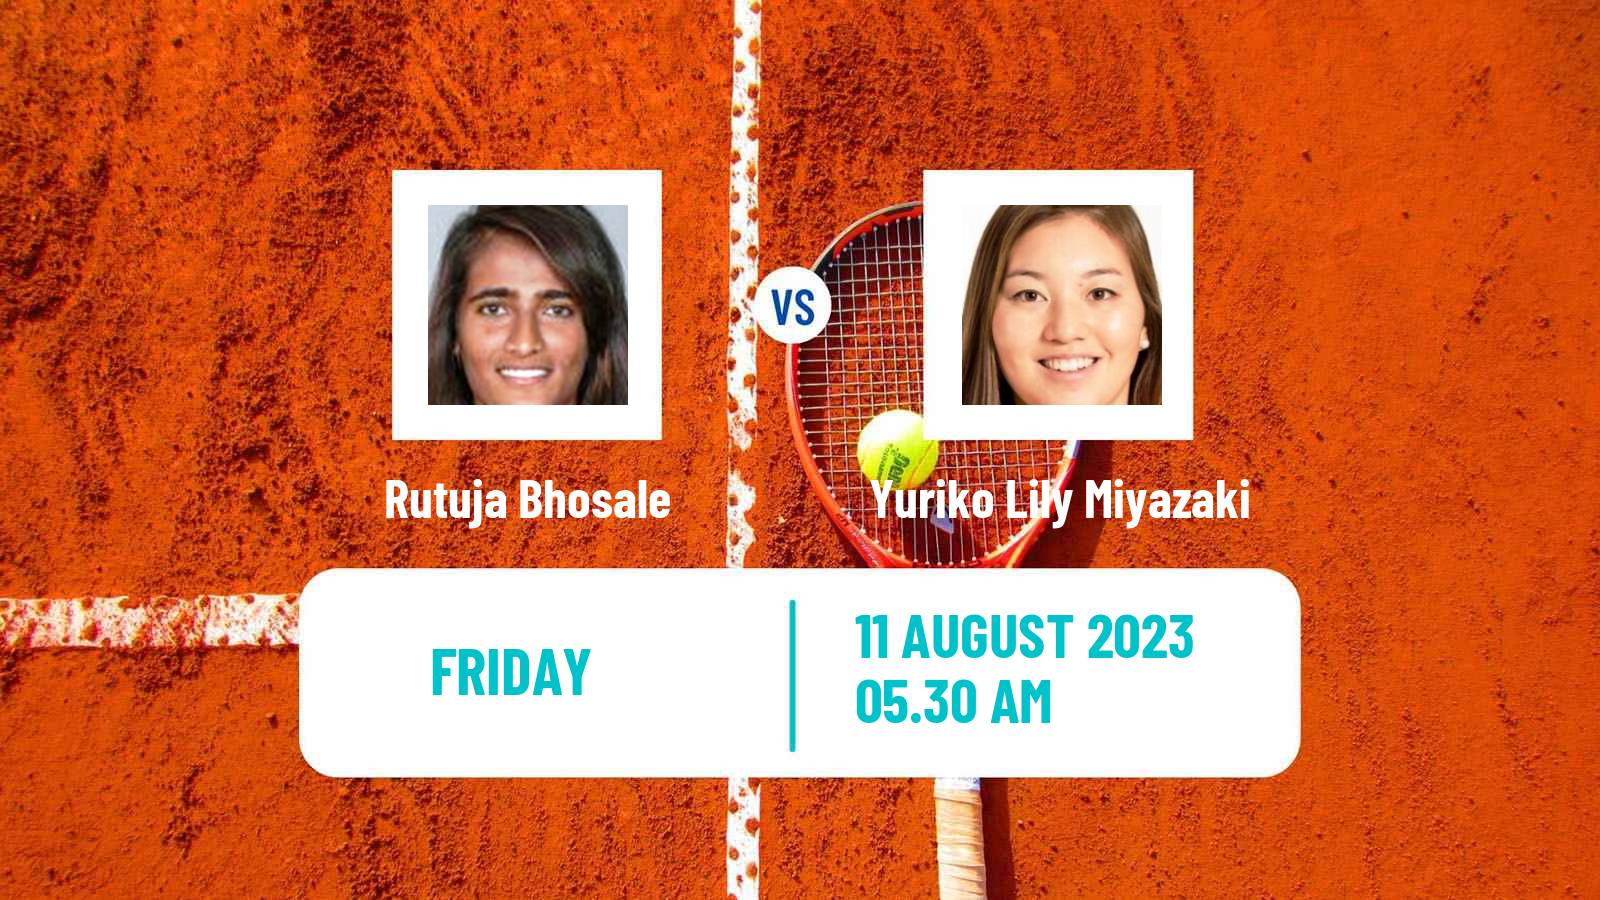 Tennis ITF W25 Roehampton 2 Women Rutuja Bhosale - Yuriko Lily Miyazaki